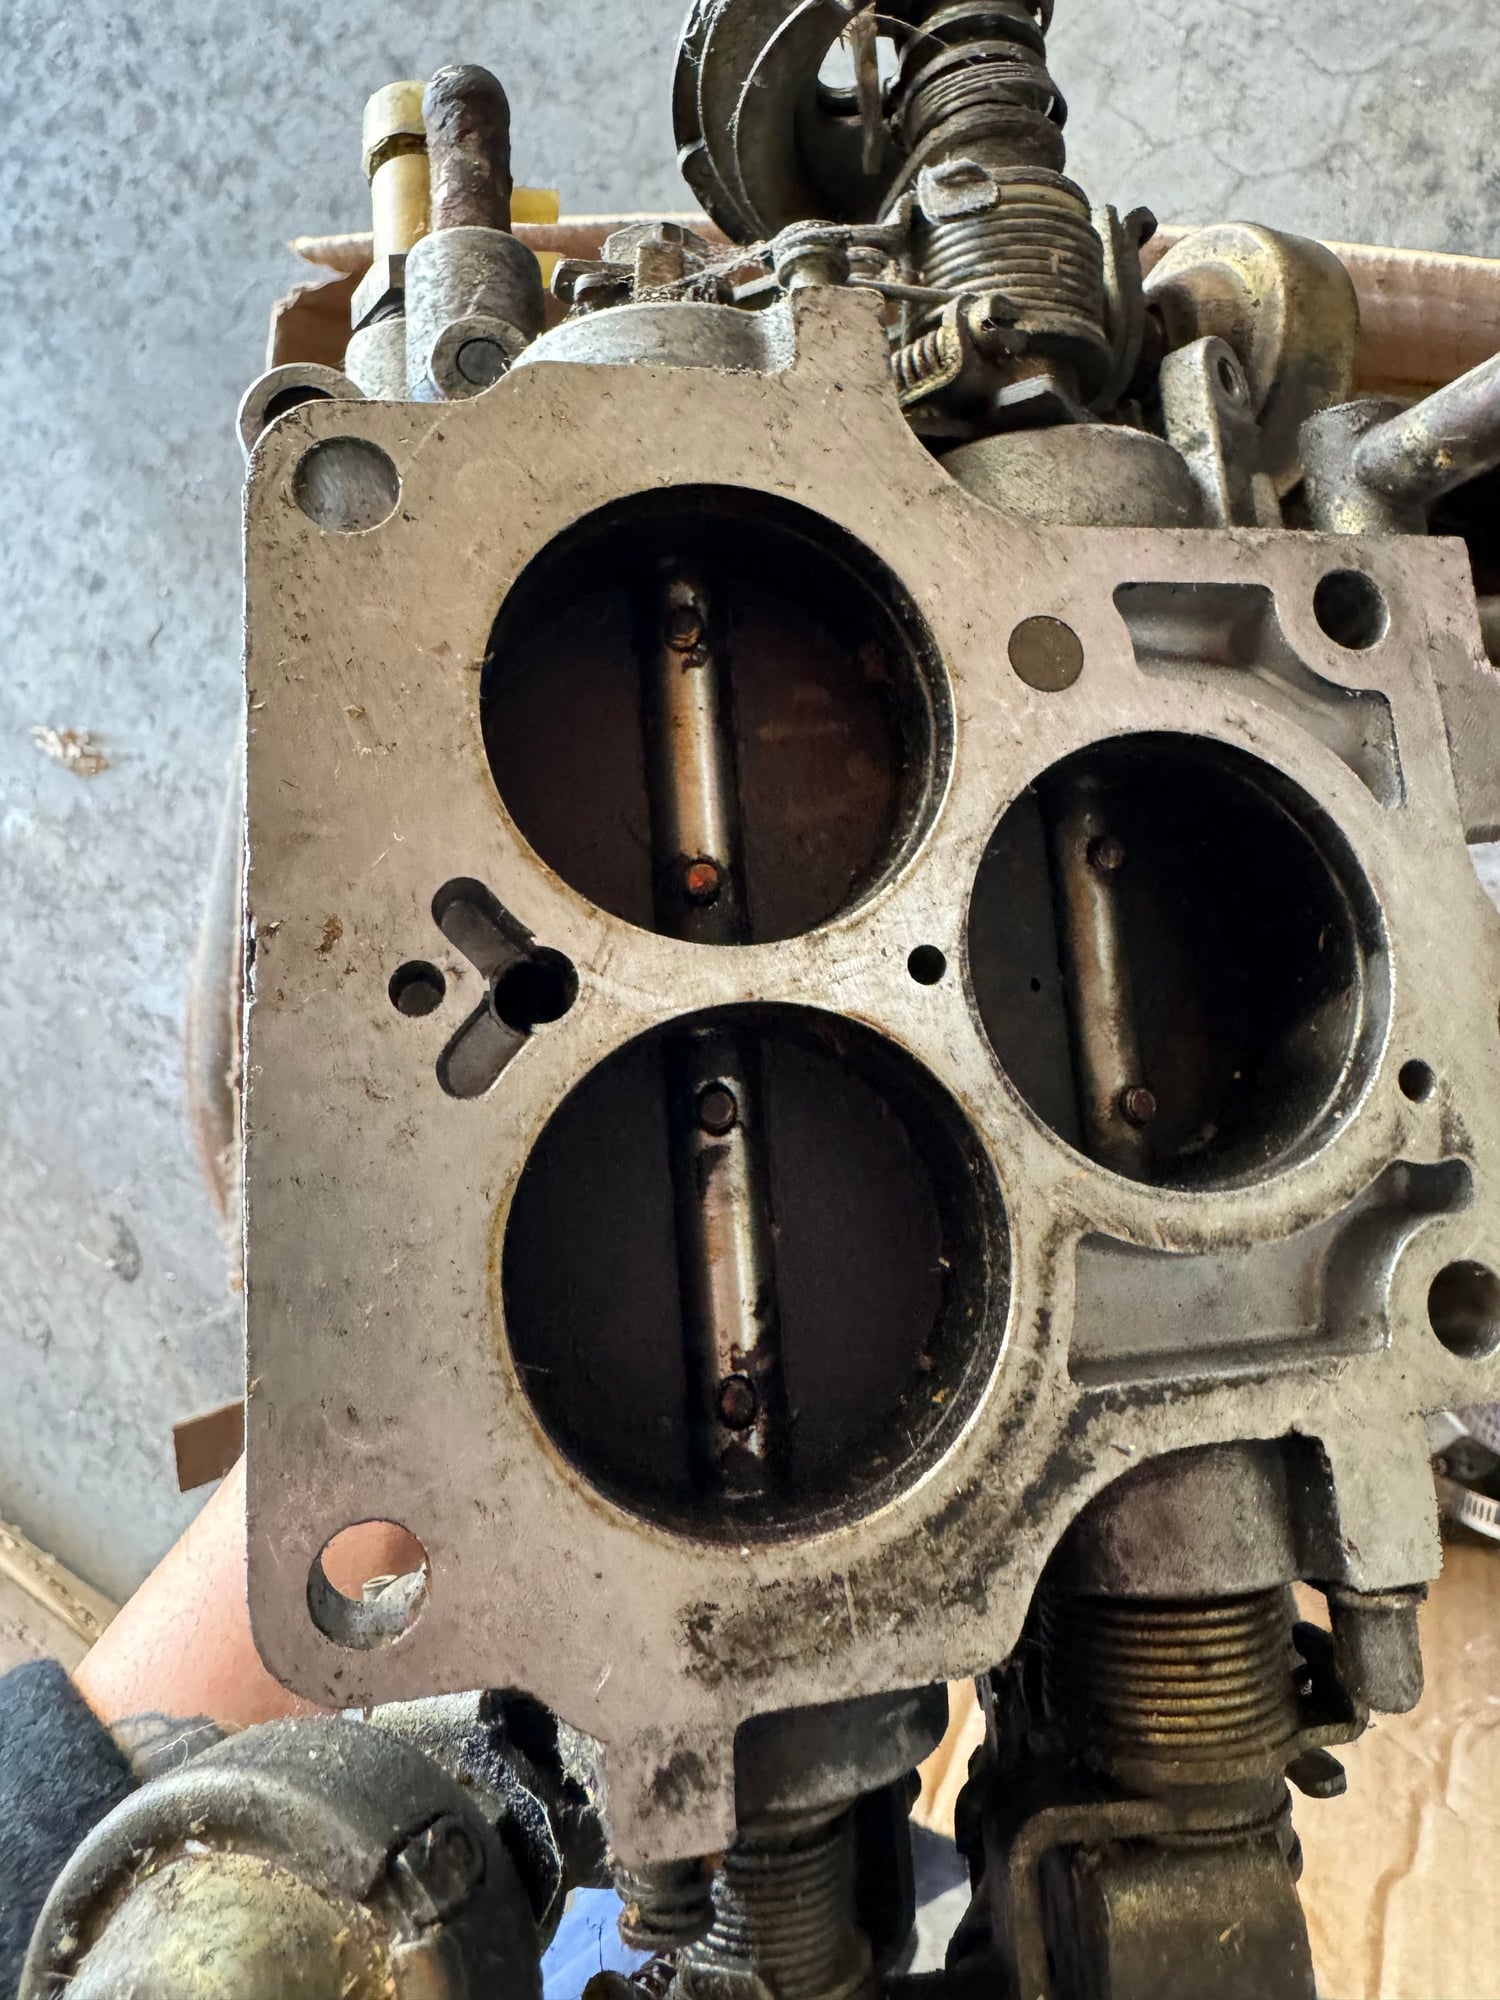 Engine - Intake/Fuel - S4 turbo parts - Used - Saint Louis, MO 63034, United States